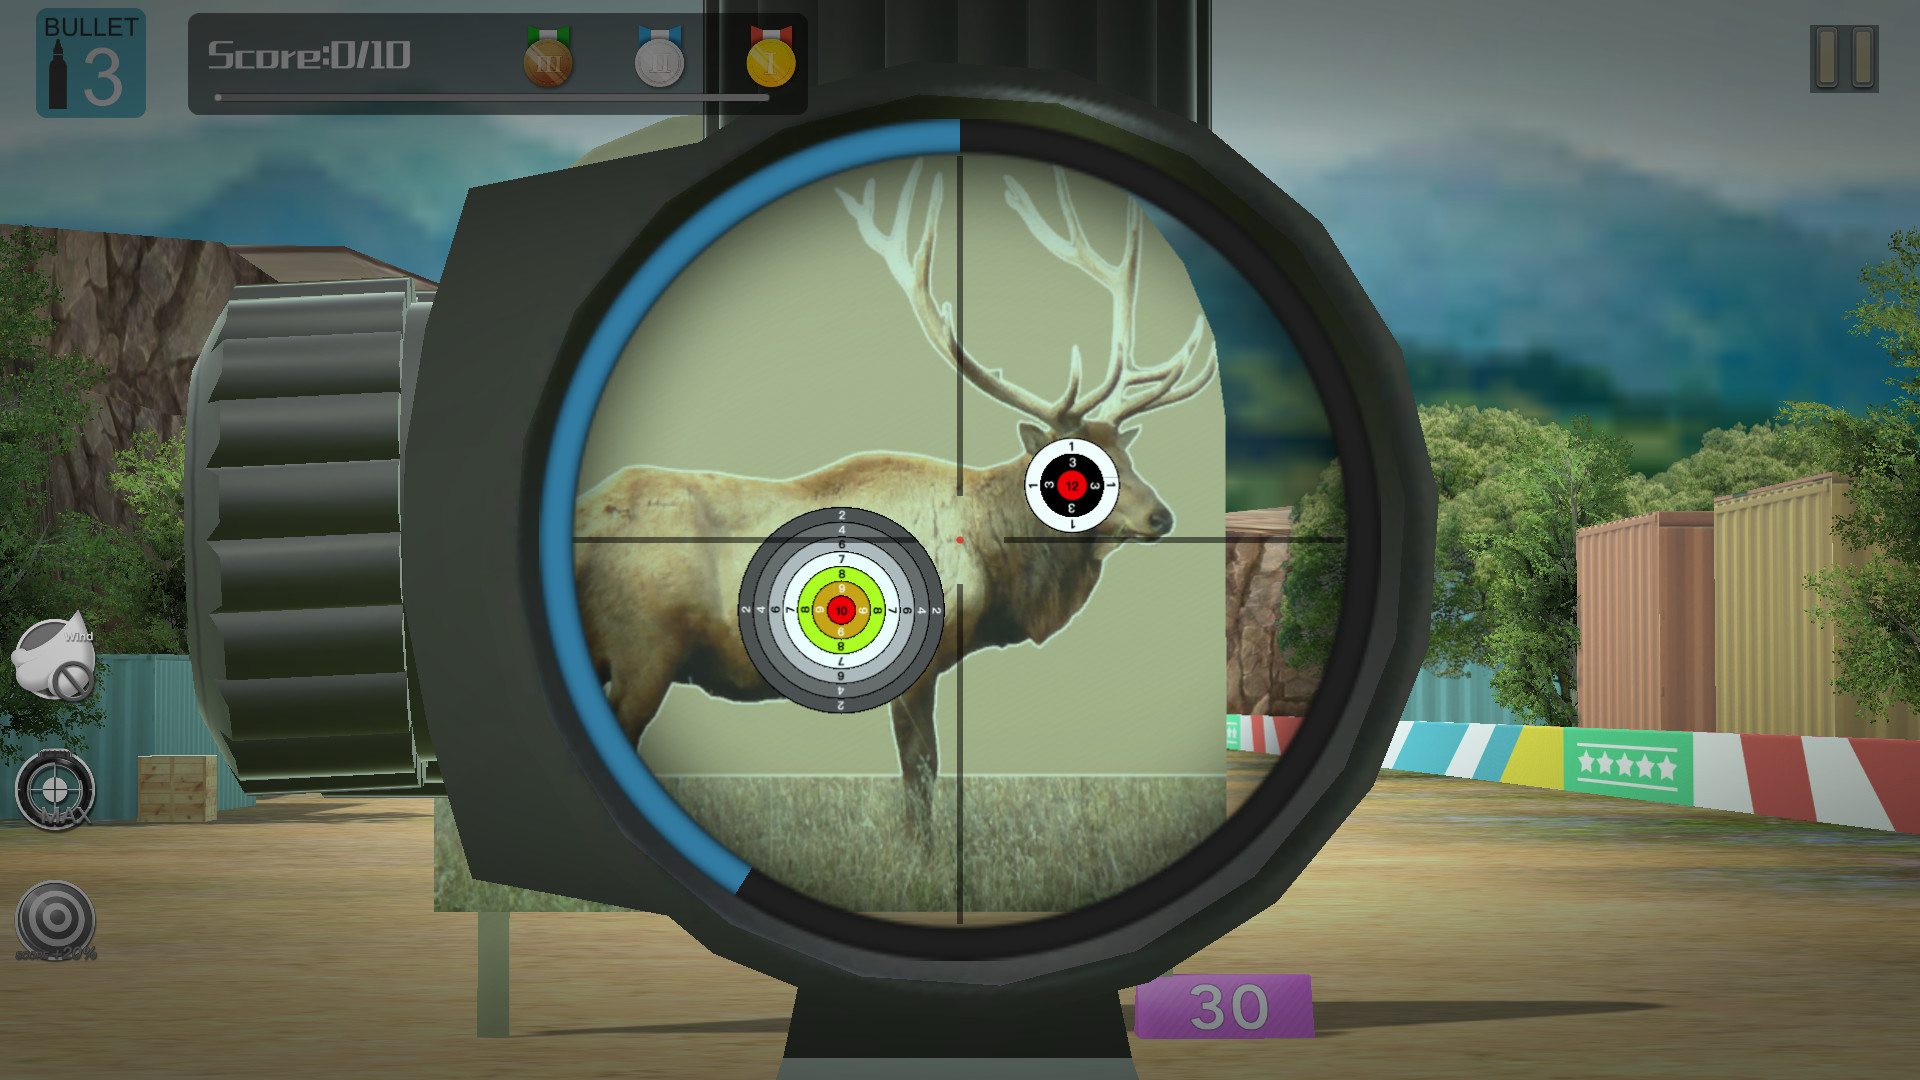 Hunter screenshot